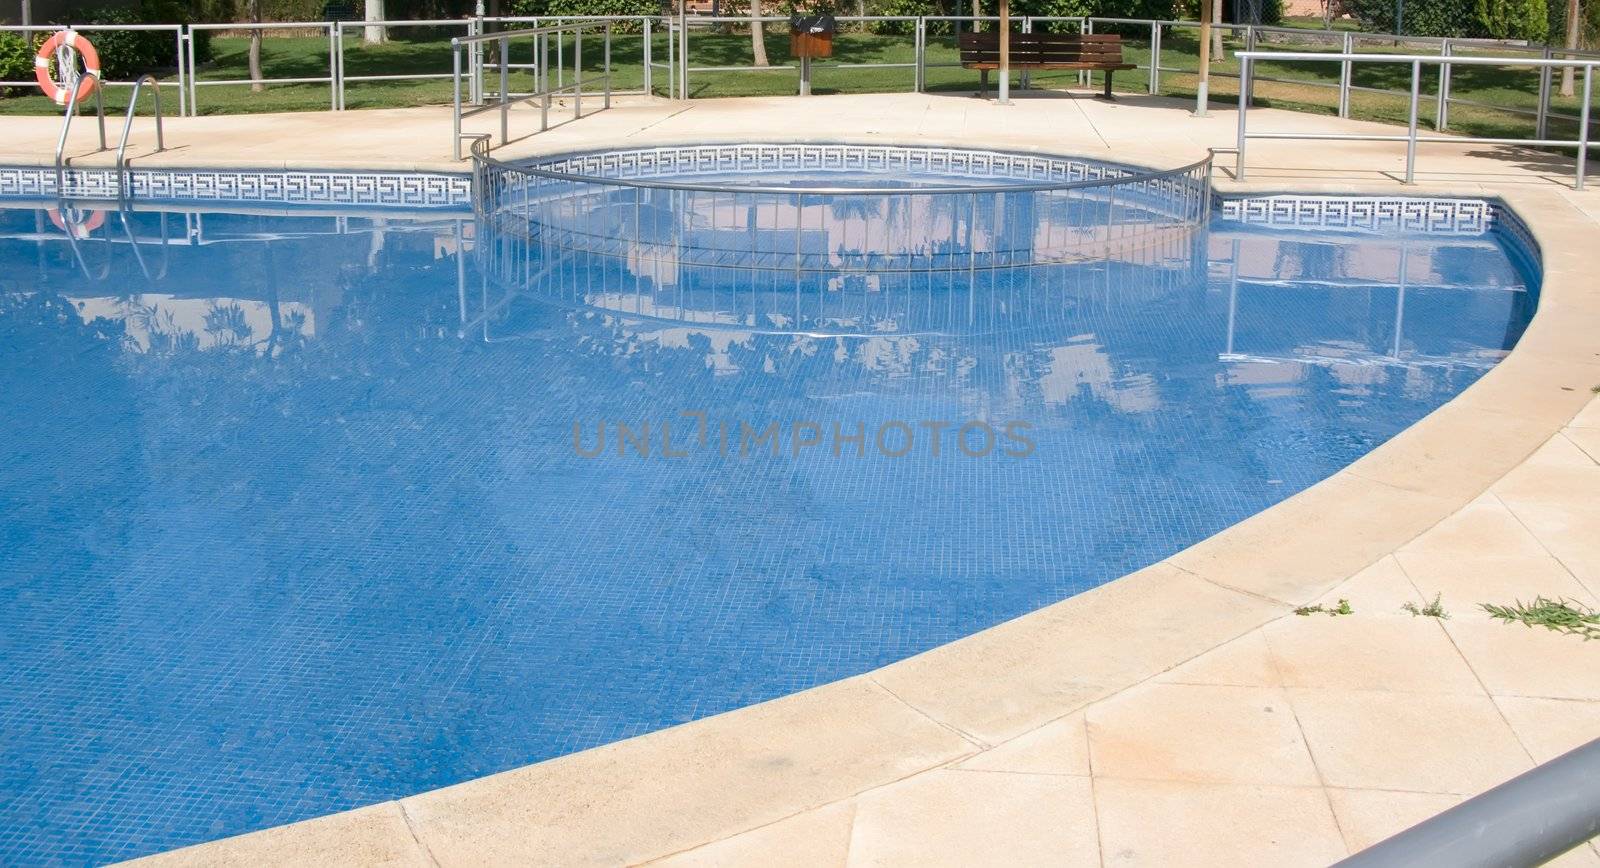  swimming pool 
 by olgaolga